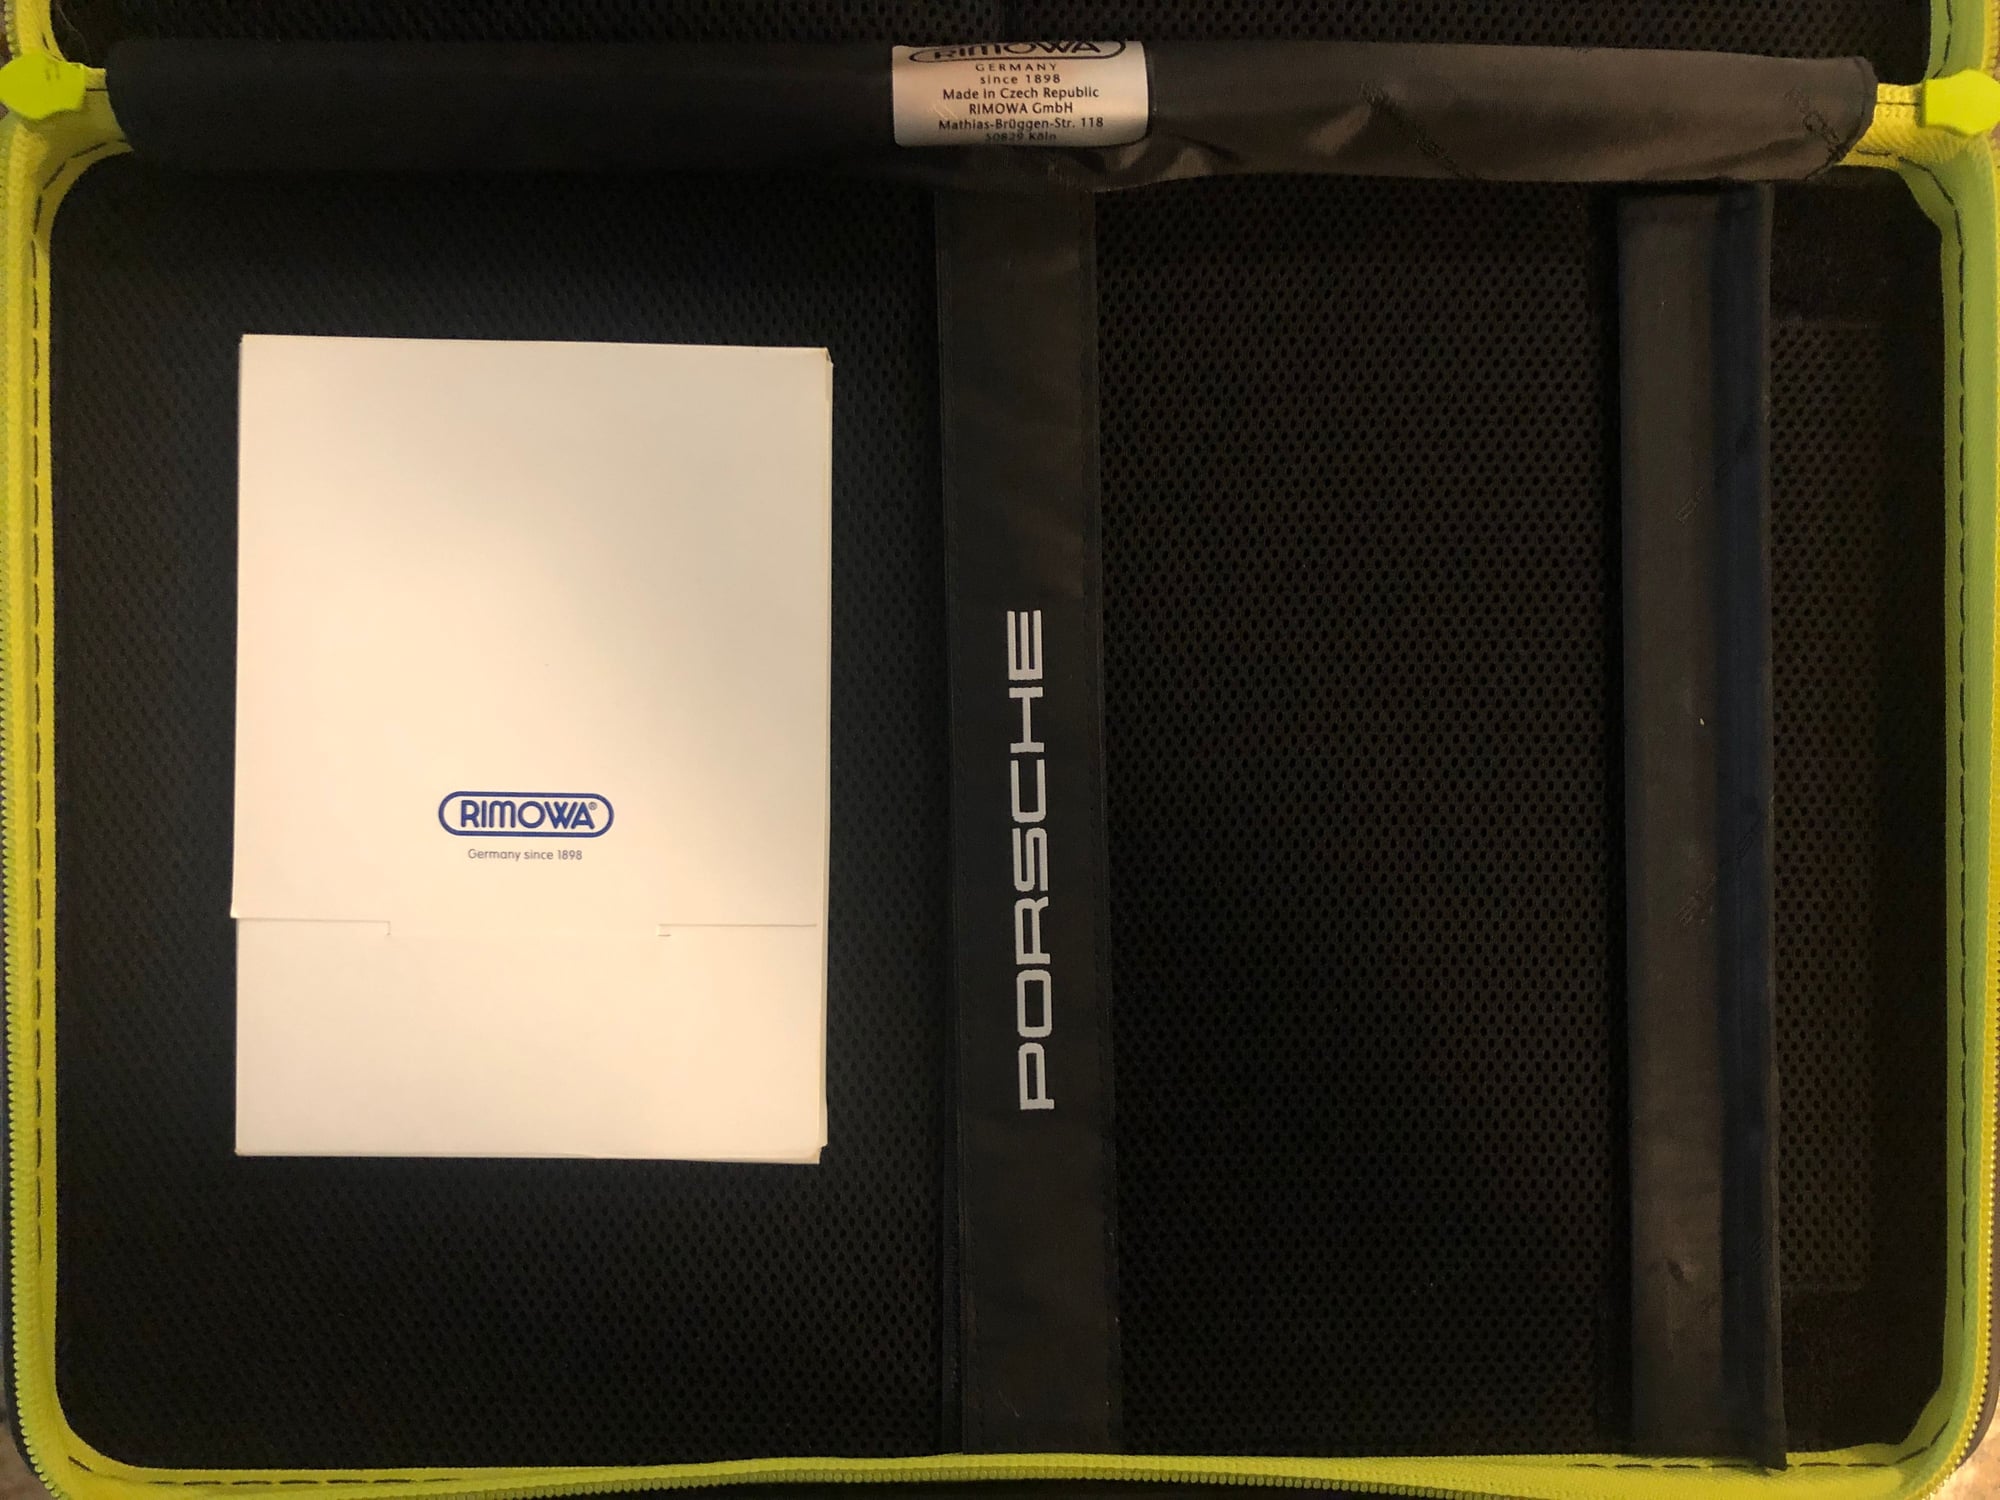 Miscellaneous - Porsche RIMOVA Driver Selection Cover Laptop Case Ultralight - New - Lisle, IL 60532, United States